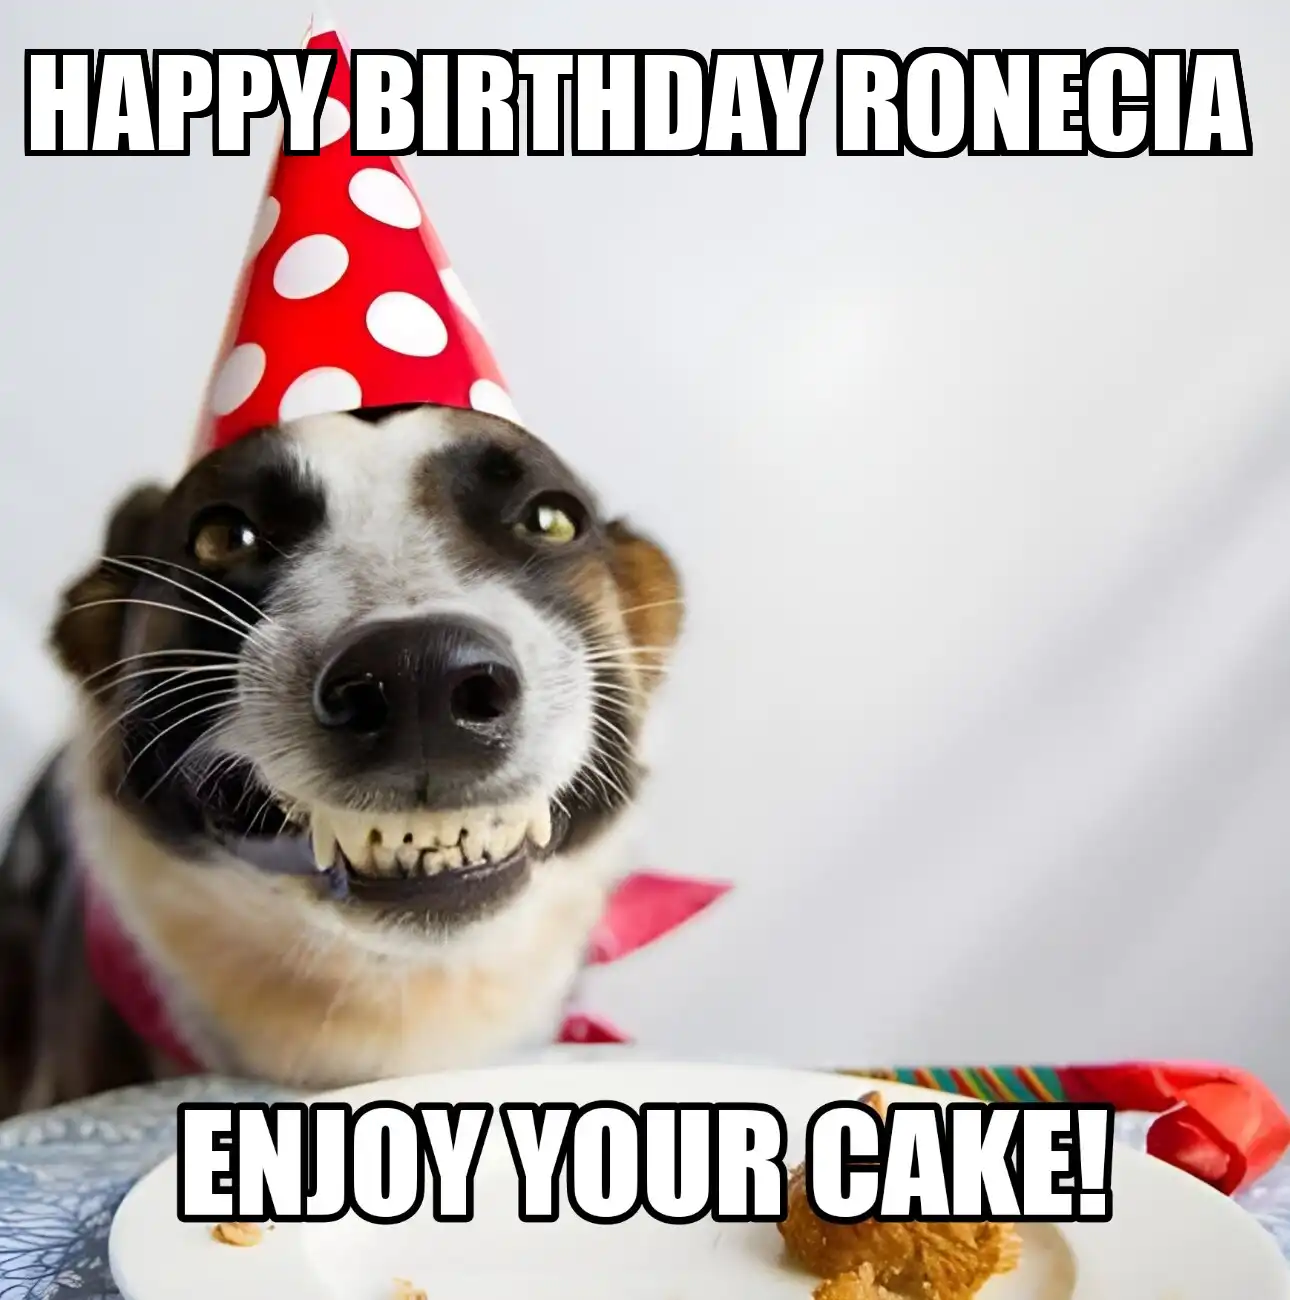 Happy Birthday Ronecia Enjoy Your Cake Dog Meme